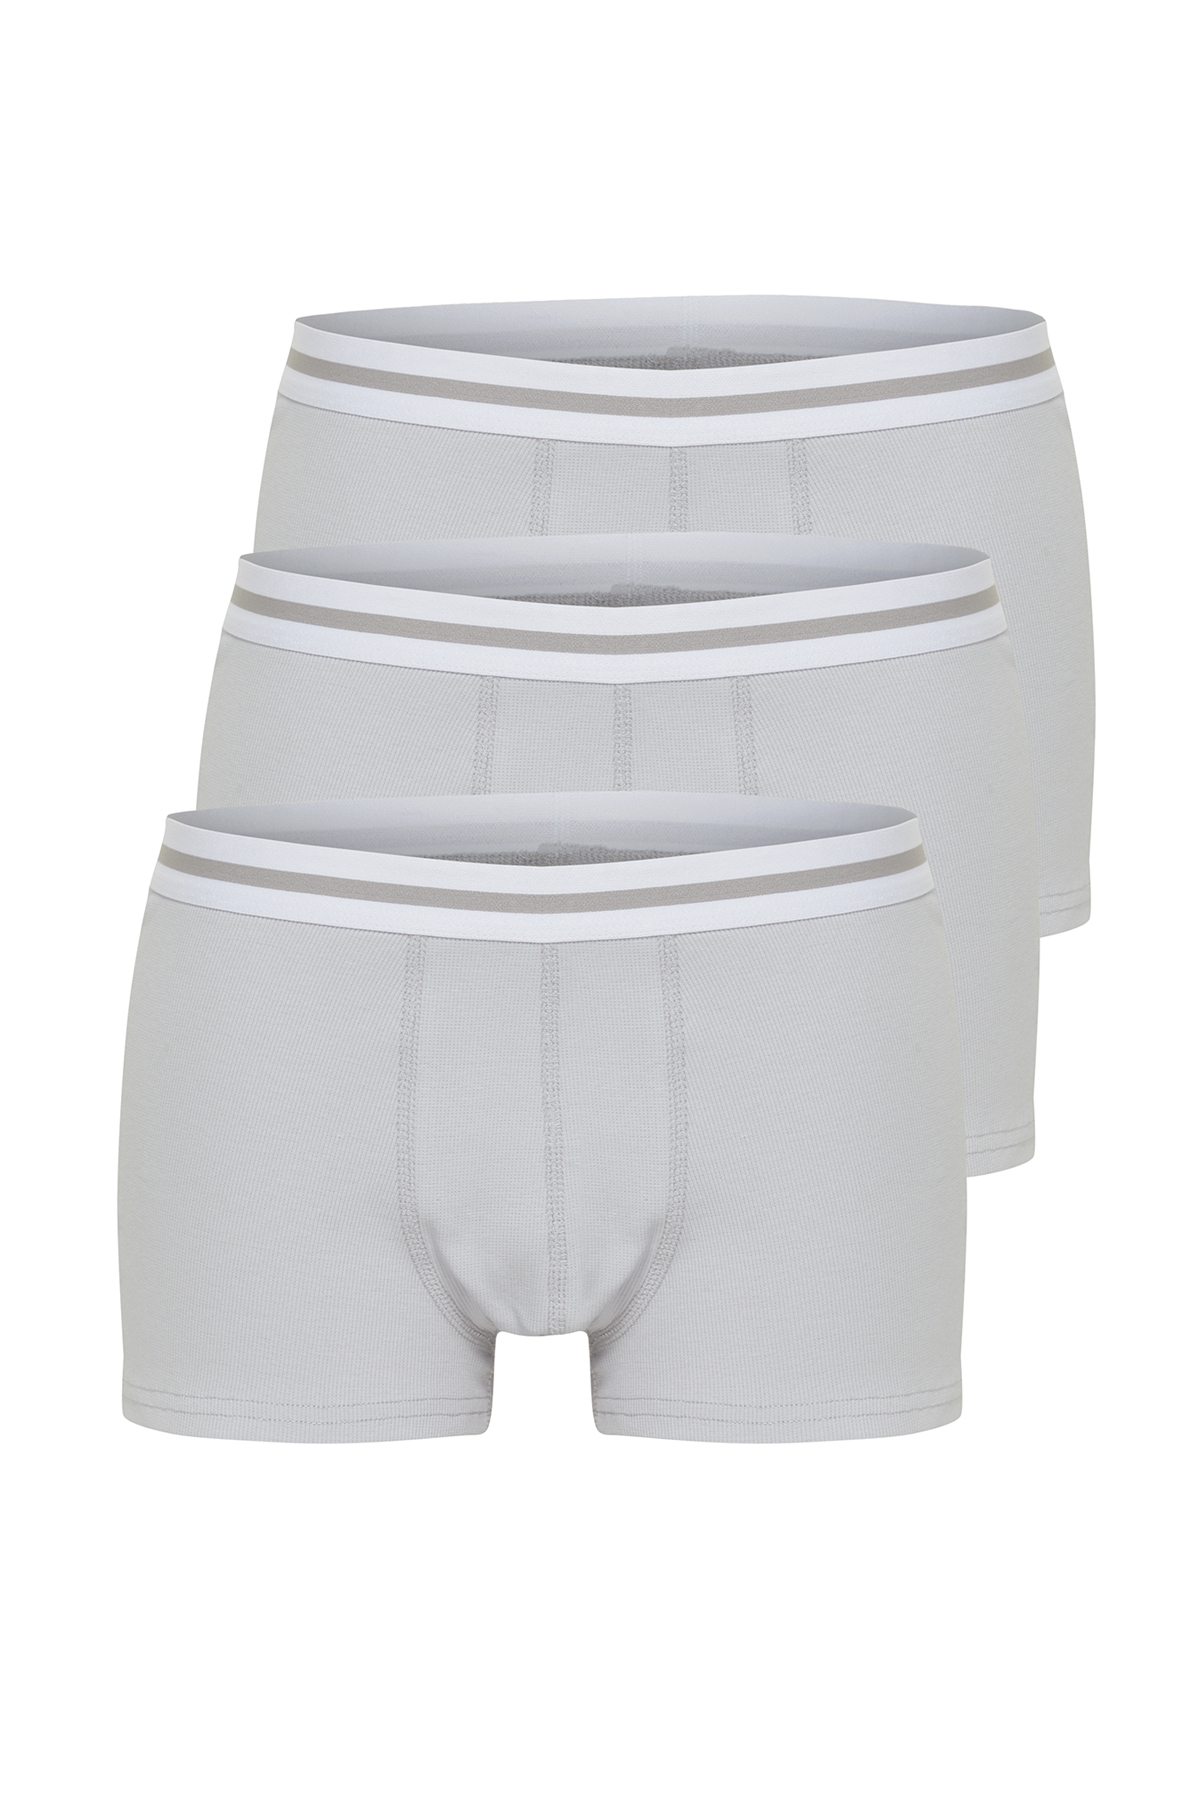 Levně Trendyol Gray Striped Elastic Cotton 3-Piece Camisole Basic Boxer